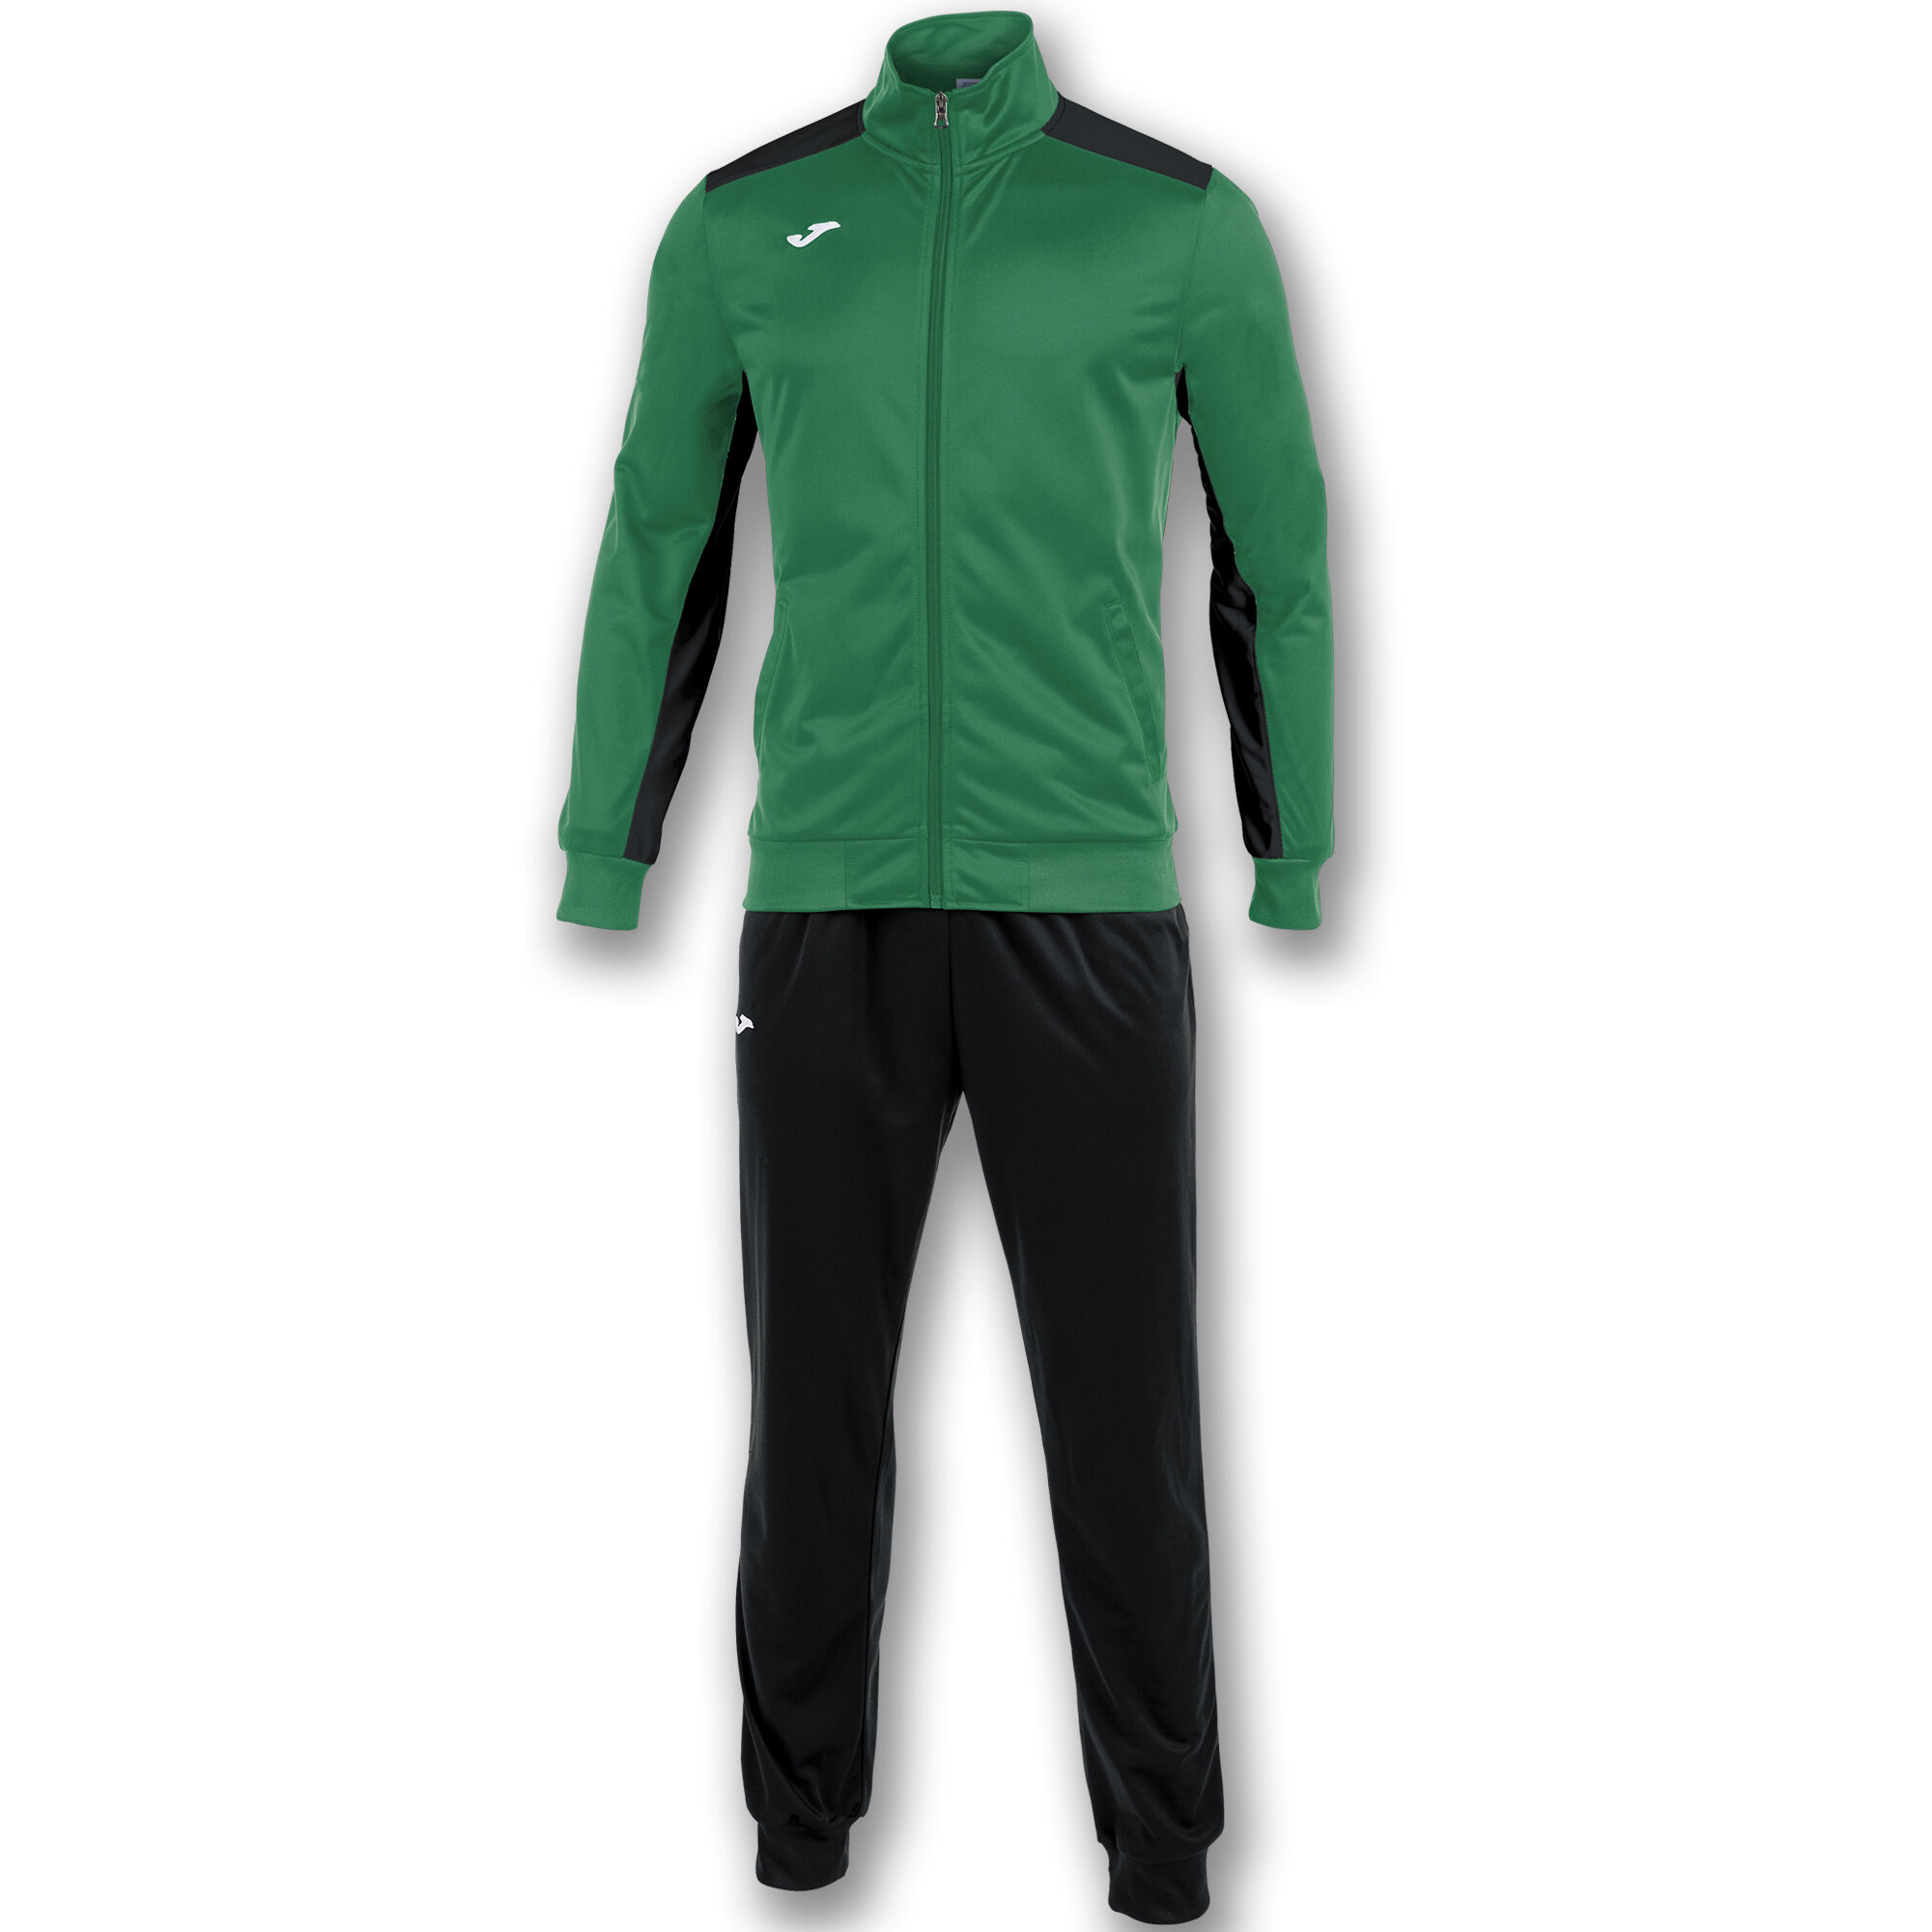 Trainingsanzug mann Academy grün schwarz